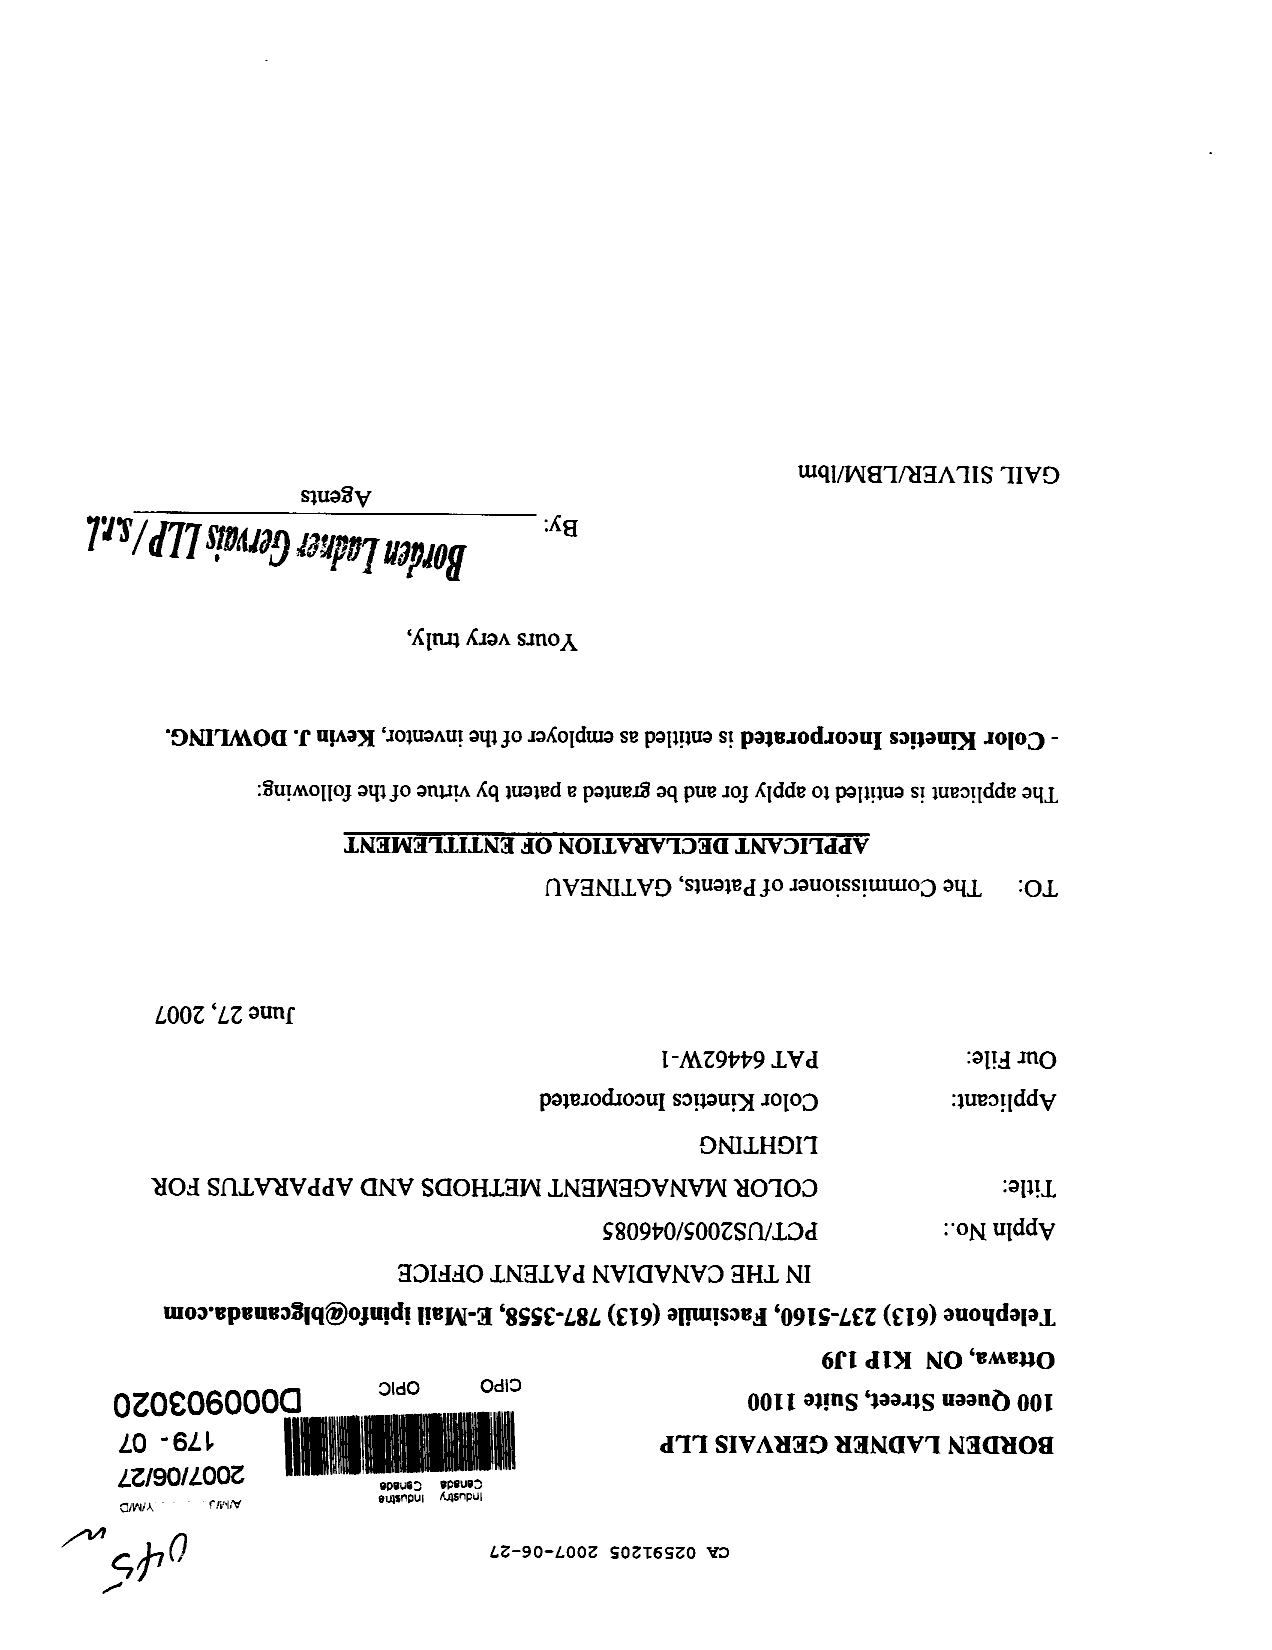 Canadian Patent Document 2591205. Correspondence 20061227. Image 1 of 1